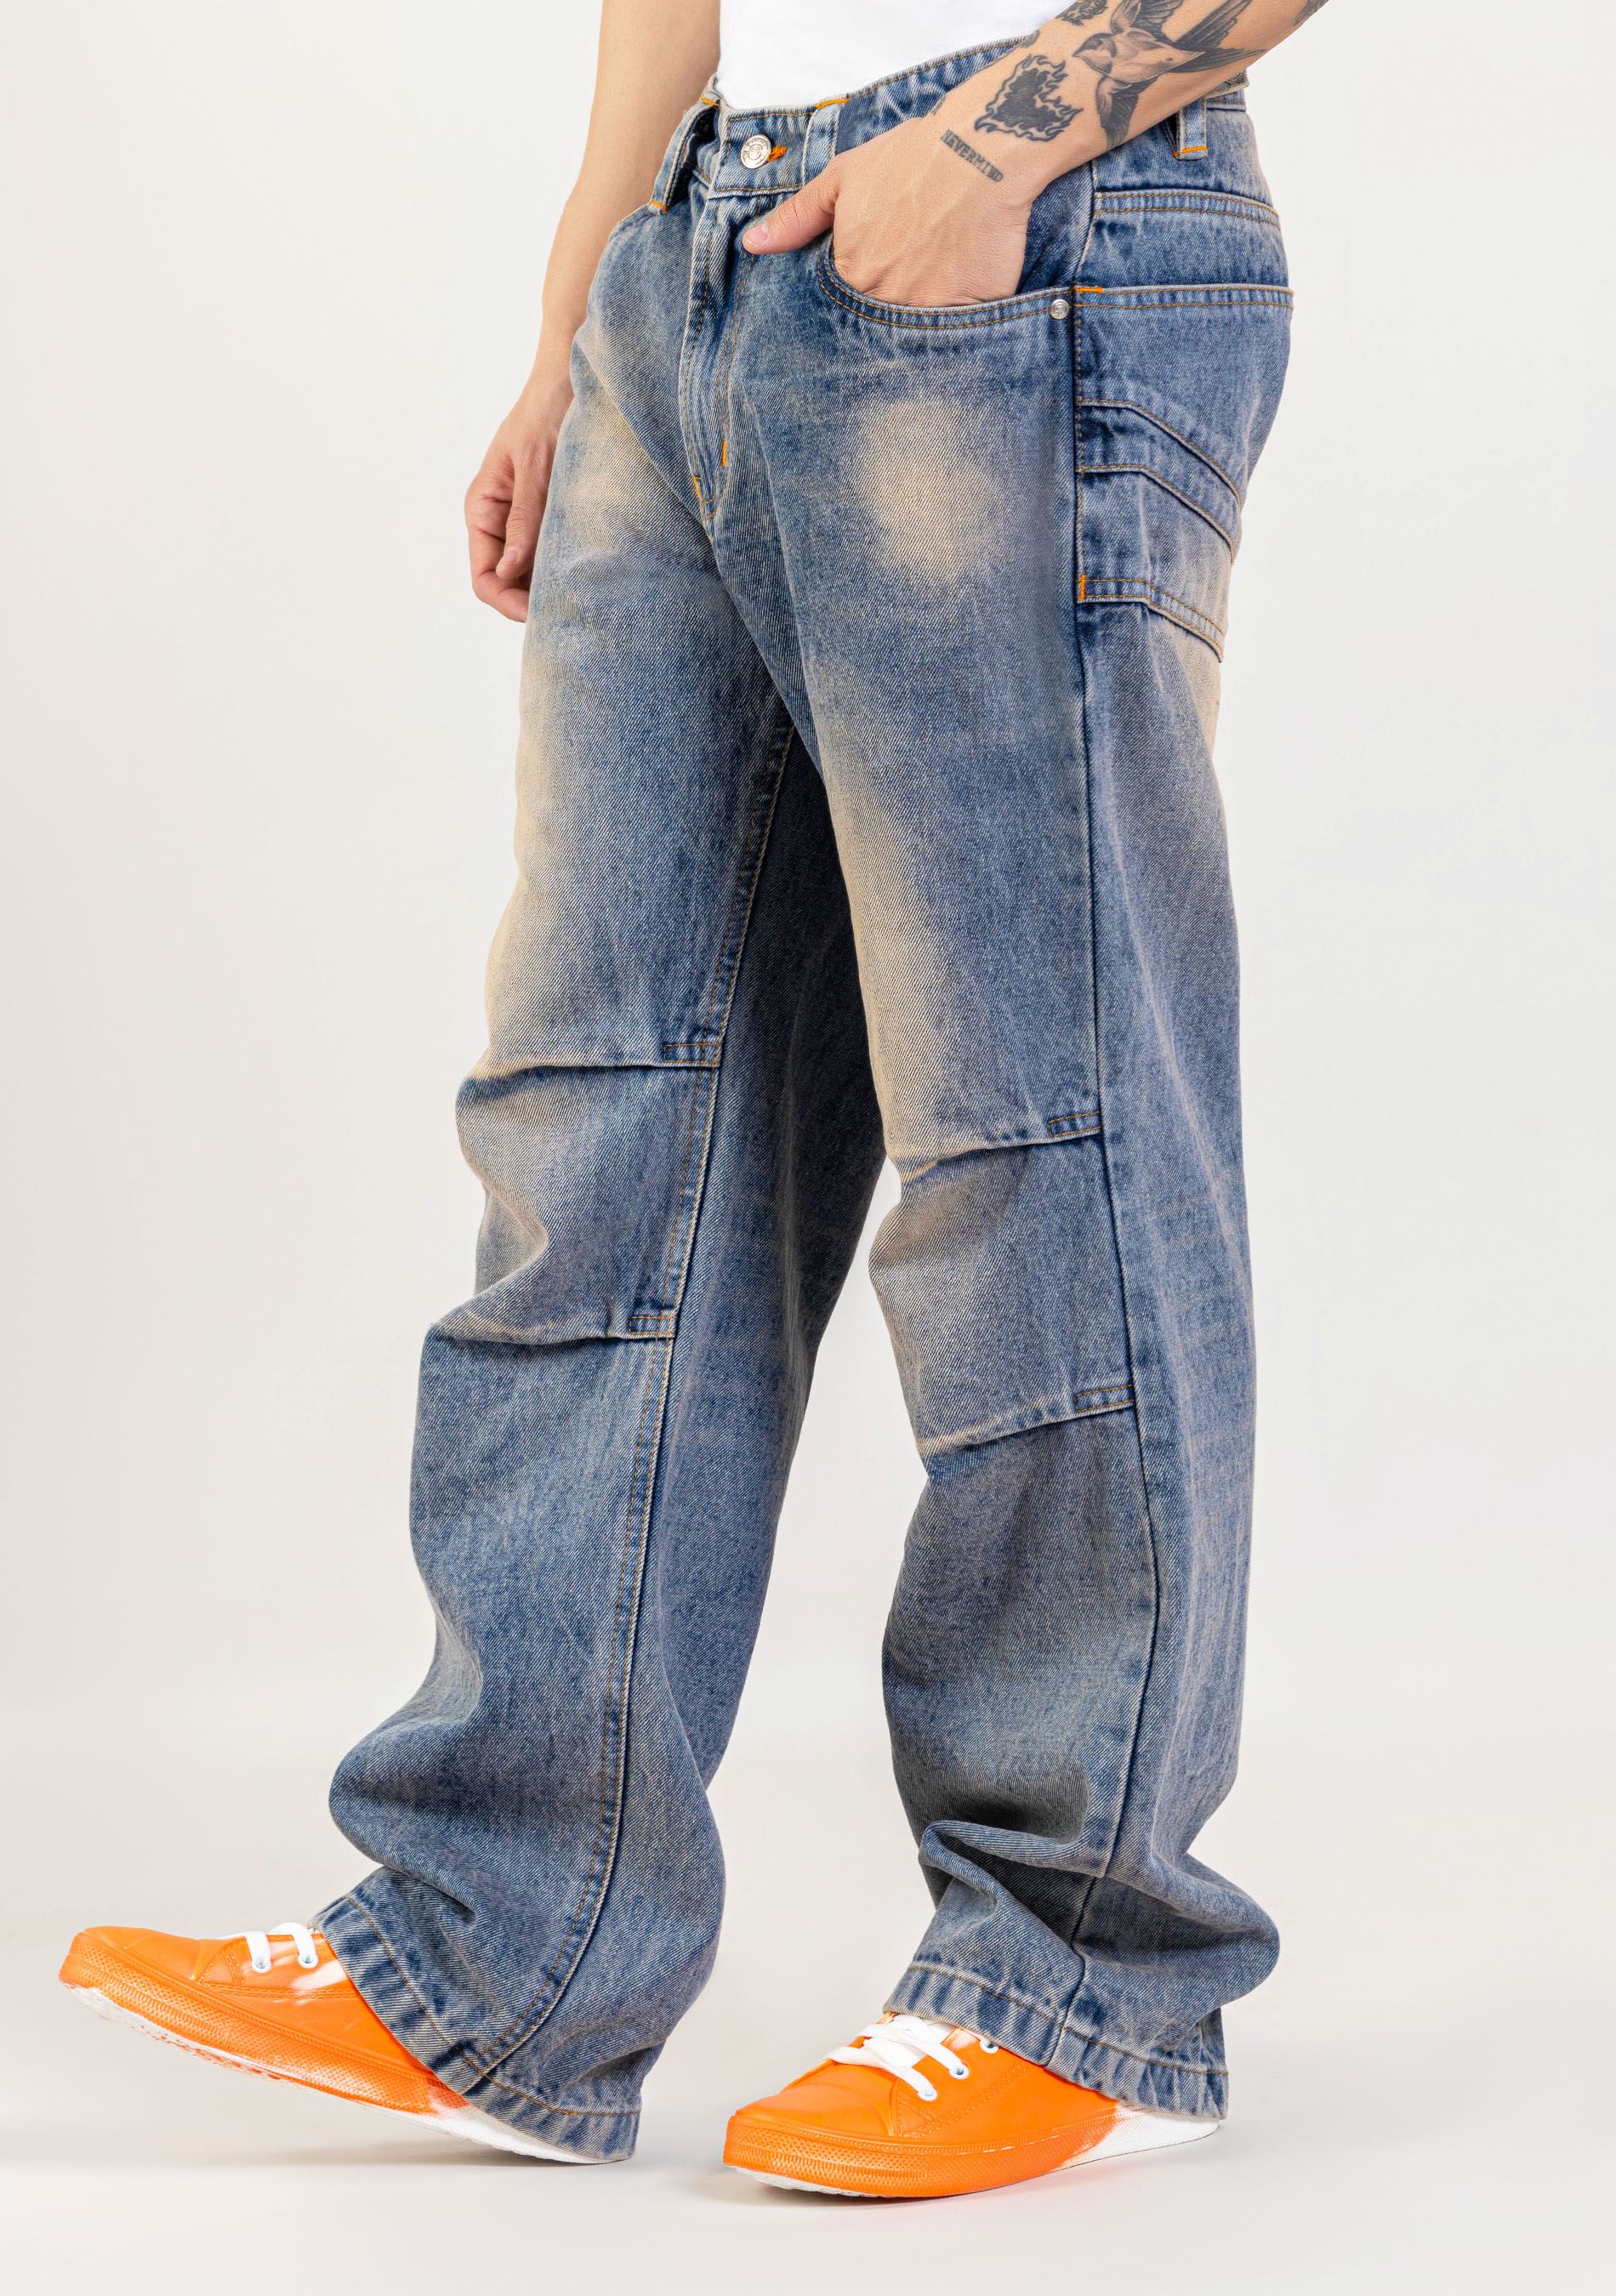 Blue Wide Leg Men's Fashion Jeans - Buy Online in India @ Mehar